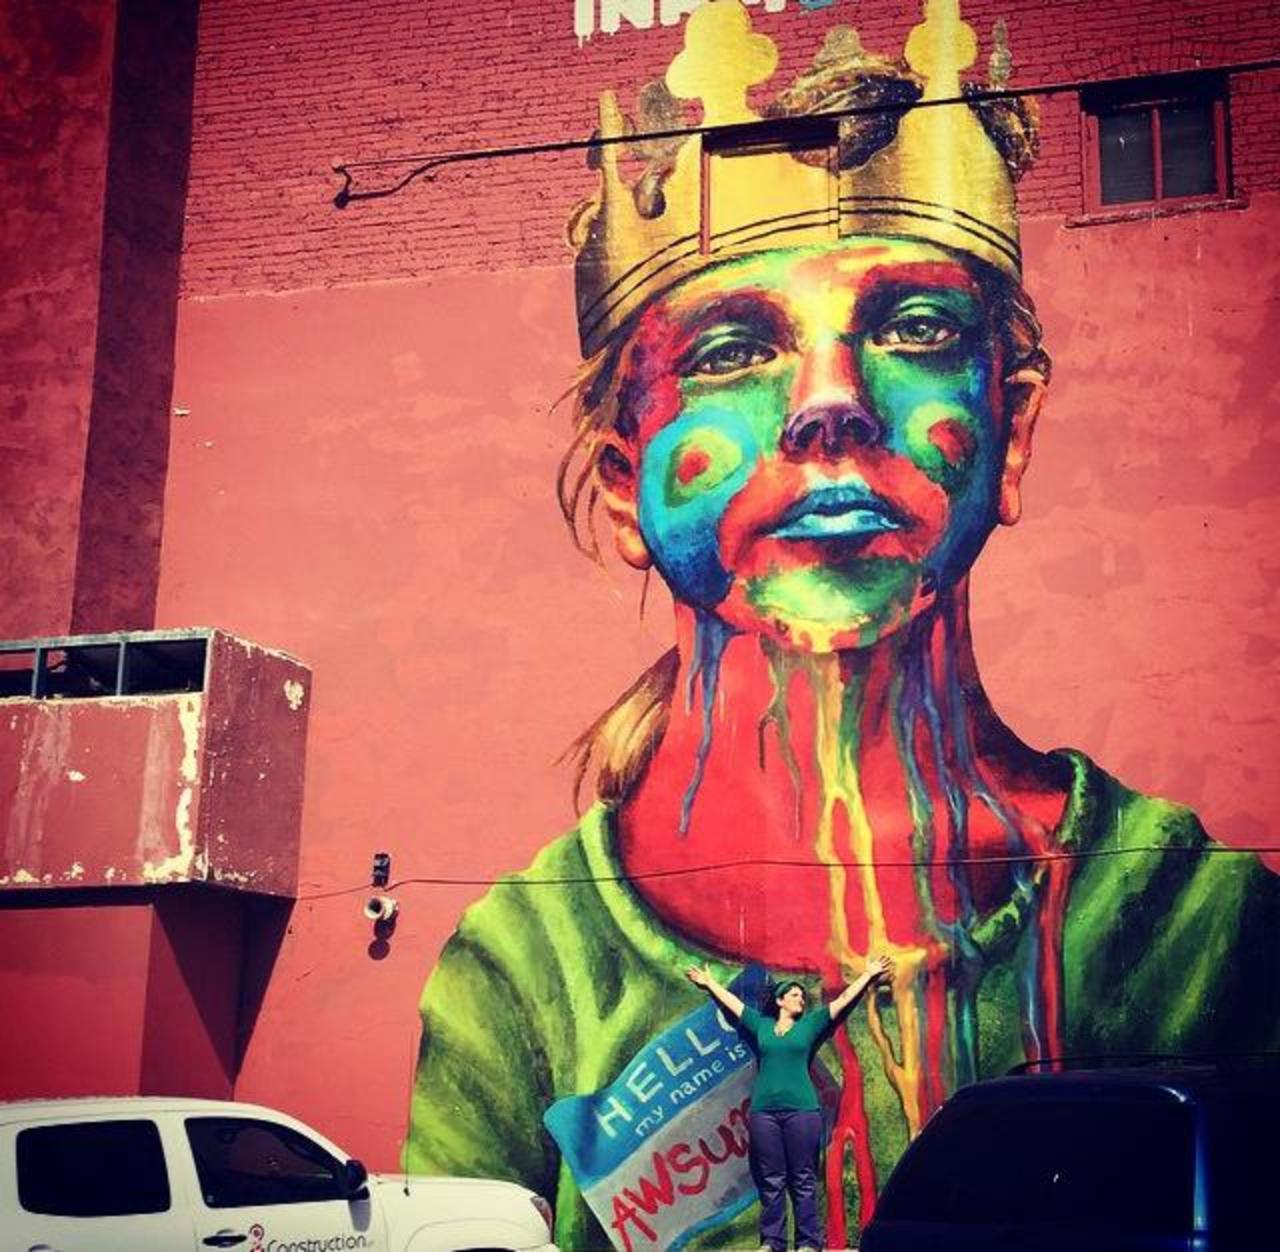 Street Art by Naomi Haverland in Denver Colorado 

#art #arte #graffiti #streetart http://t.co/Yocs2WTNZV googlestreetart chinatoniq